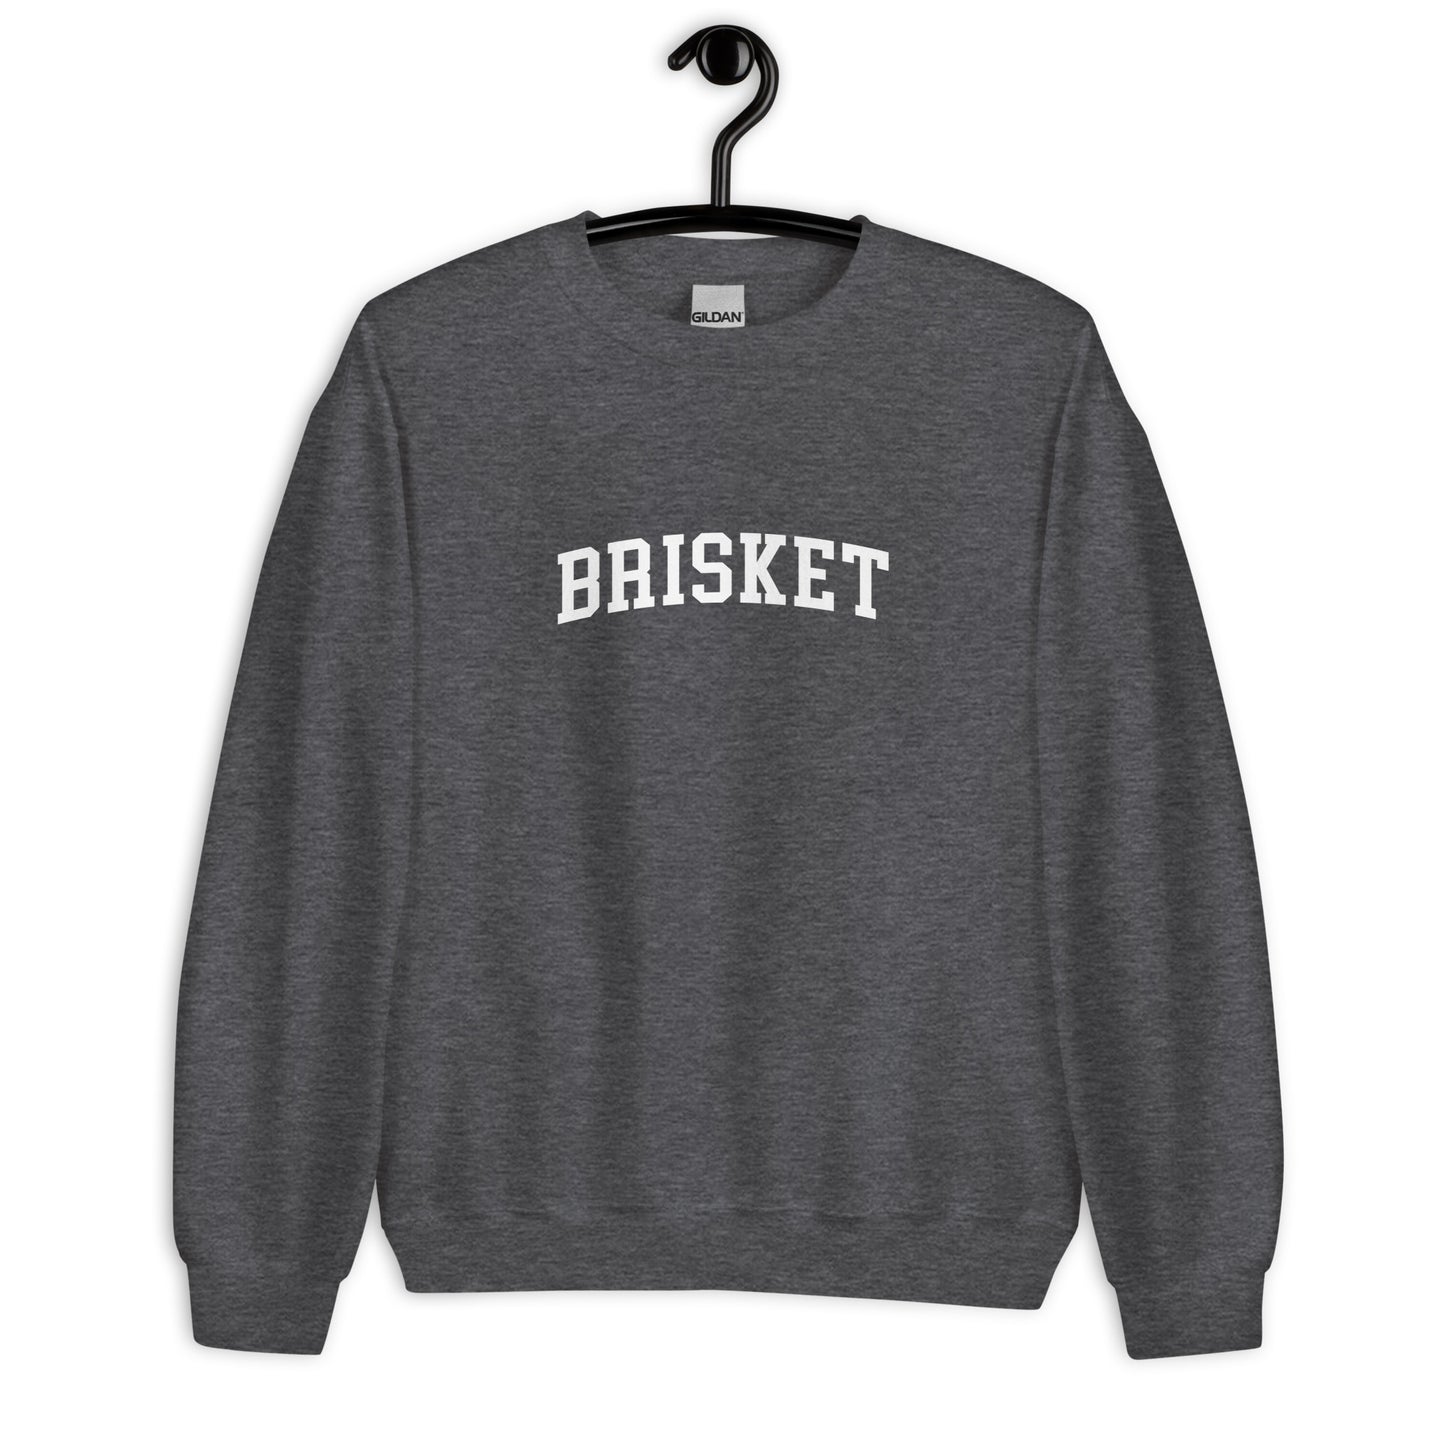 Brisket Sweatshirt - Arched Font